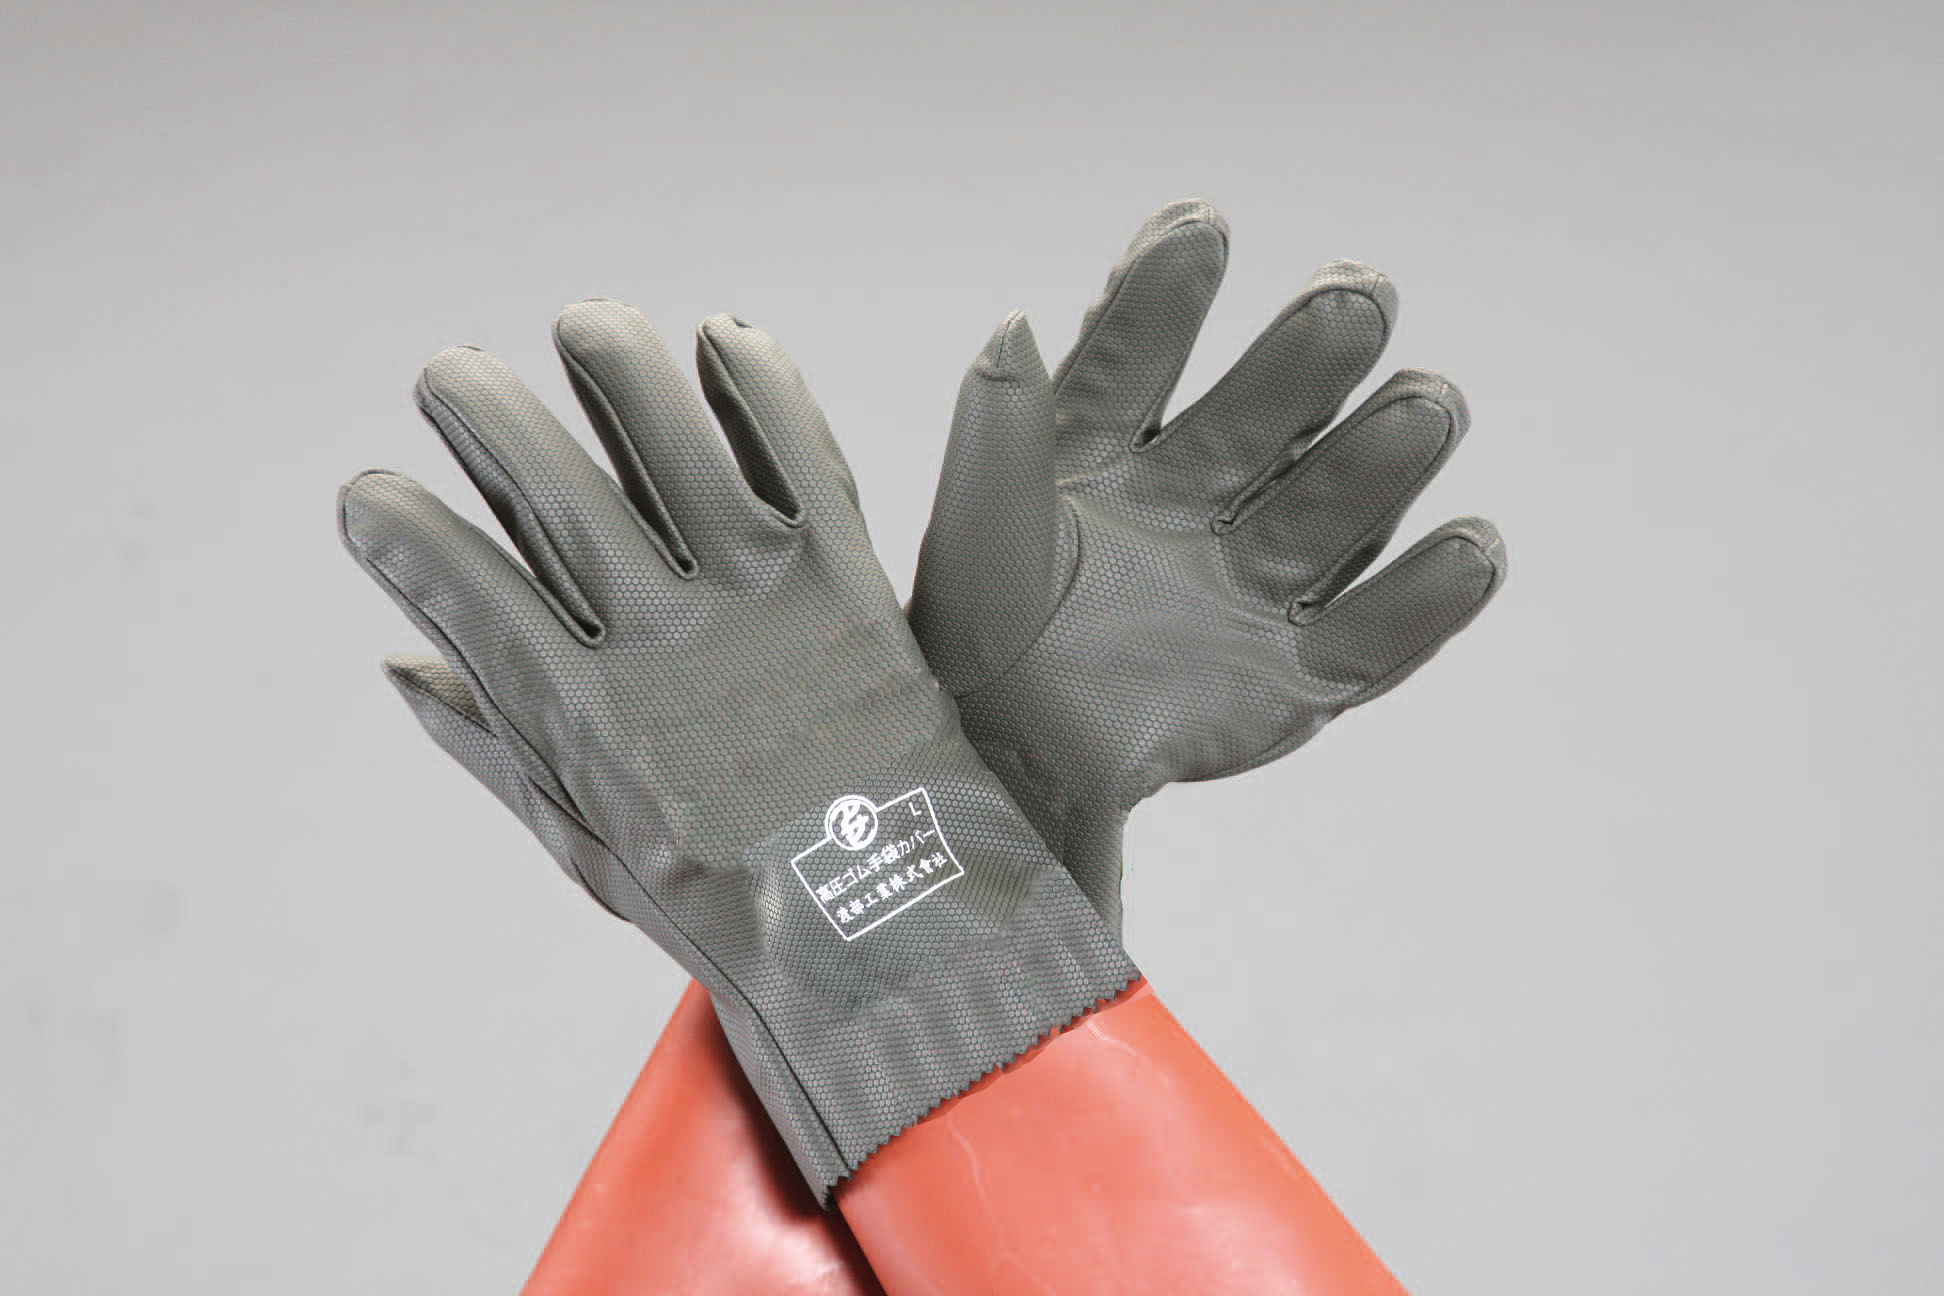 ワタベ 高圧ゴム手袋４６０ｍｍ胴太型Ｌ 555L 産業用大型機器